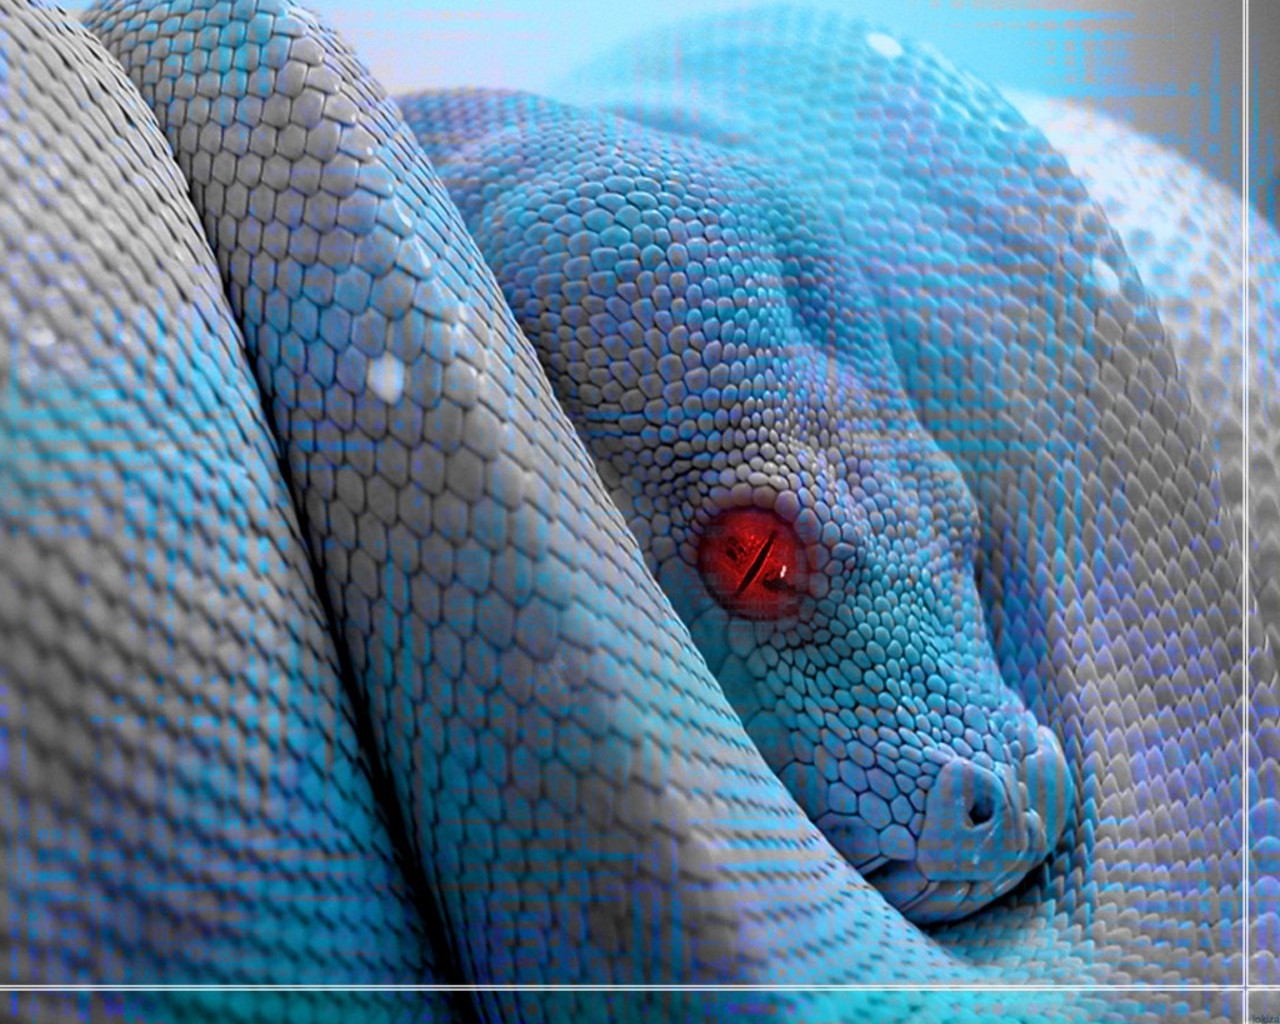 https://blogger.googleusercontent.com/img/b/R29vZ2xl/AVvXsEjXmjdiCELrzG6WIl71lM4dr0cwEIDev4vRONHiSxTVzugQVgp3Q6pHYxBNyoS9HD1pwrjUO0uiBt2iemgsLVnzgzMxSbfAms7nJlfk7PAAHZETORkdRbfCp3VZYka4ANfdRfSB5U-ZQP7j/s1600/animals_reptiles-blue-snake-wallpaper_1.jpg